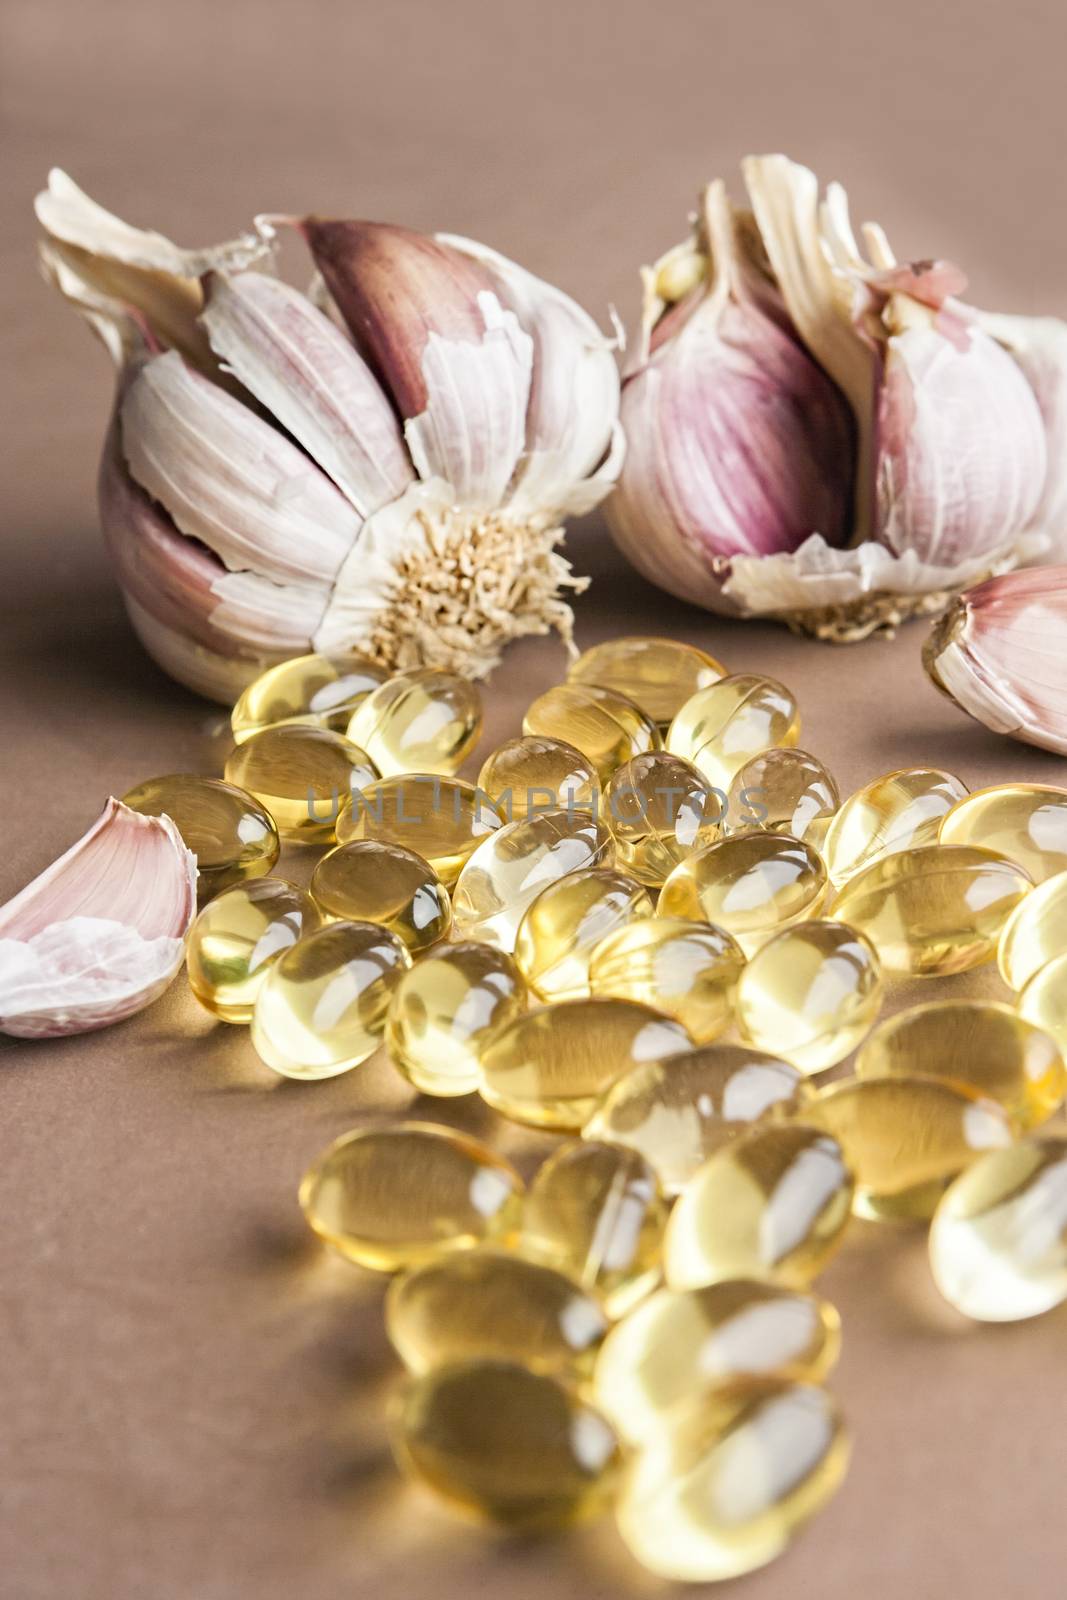 Garlic oil capsules, vitamins d pills  by digicomphoto